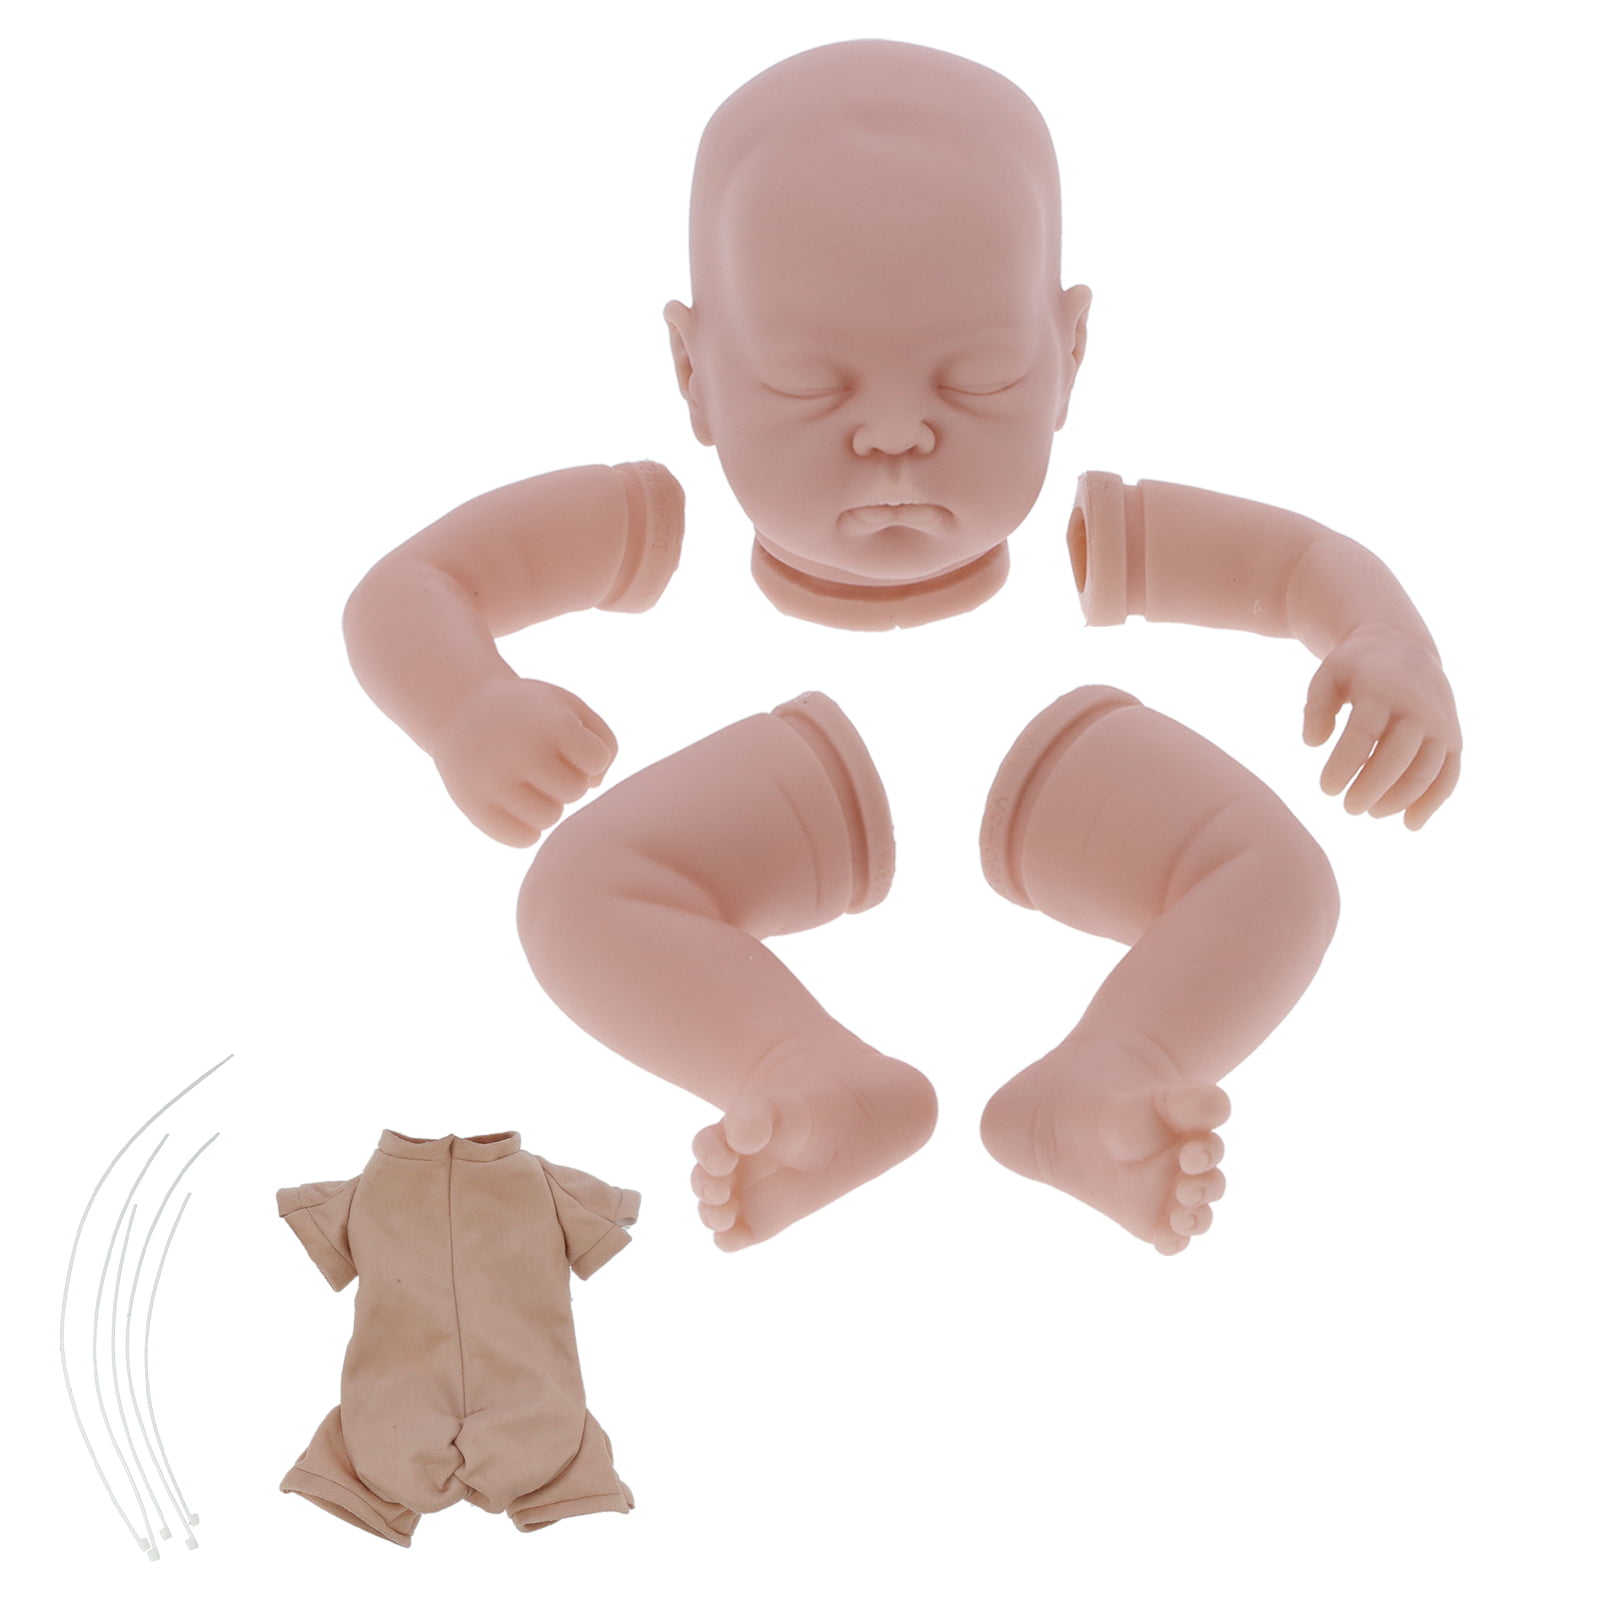 Large 29 Inch Unpainted Reborn Full Limb Mold & Cloth Body Baby Supplies DIY 